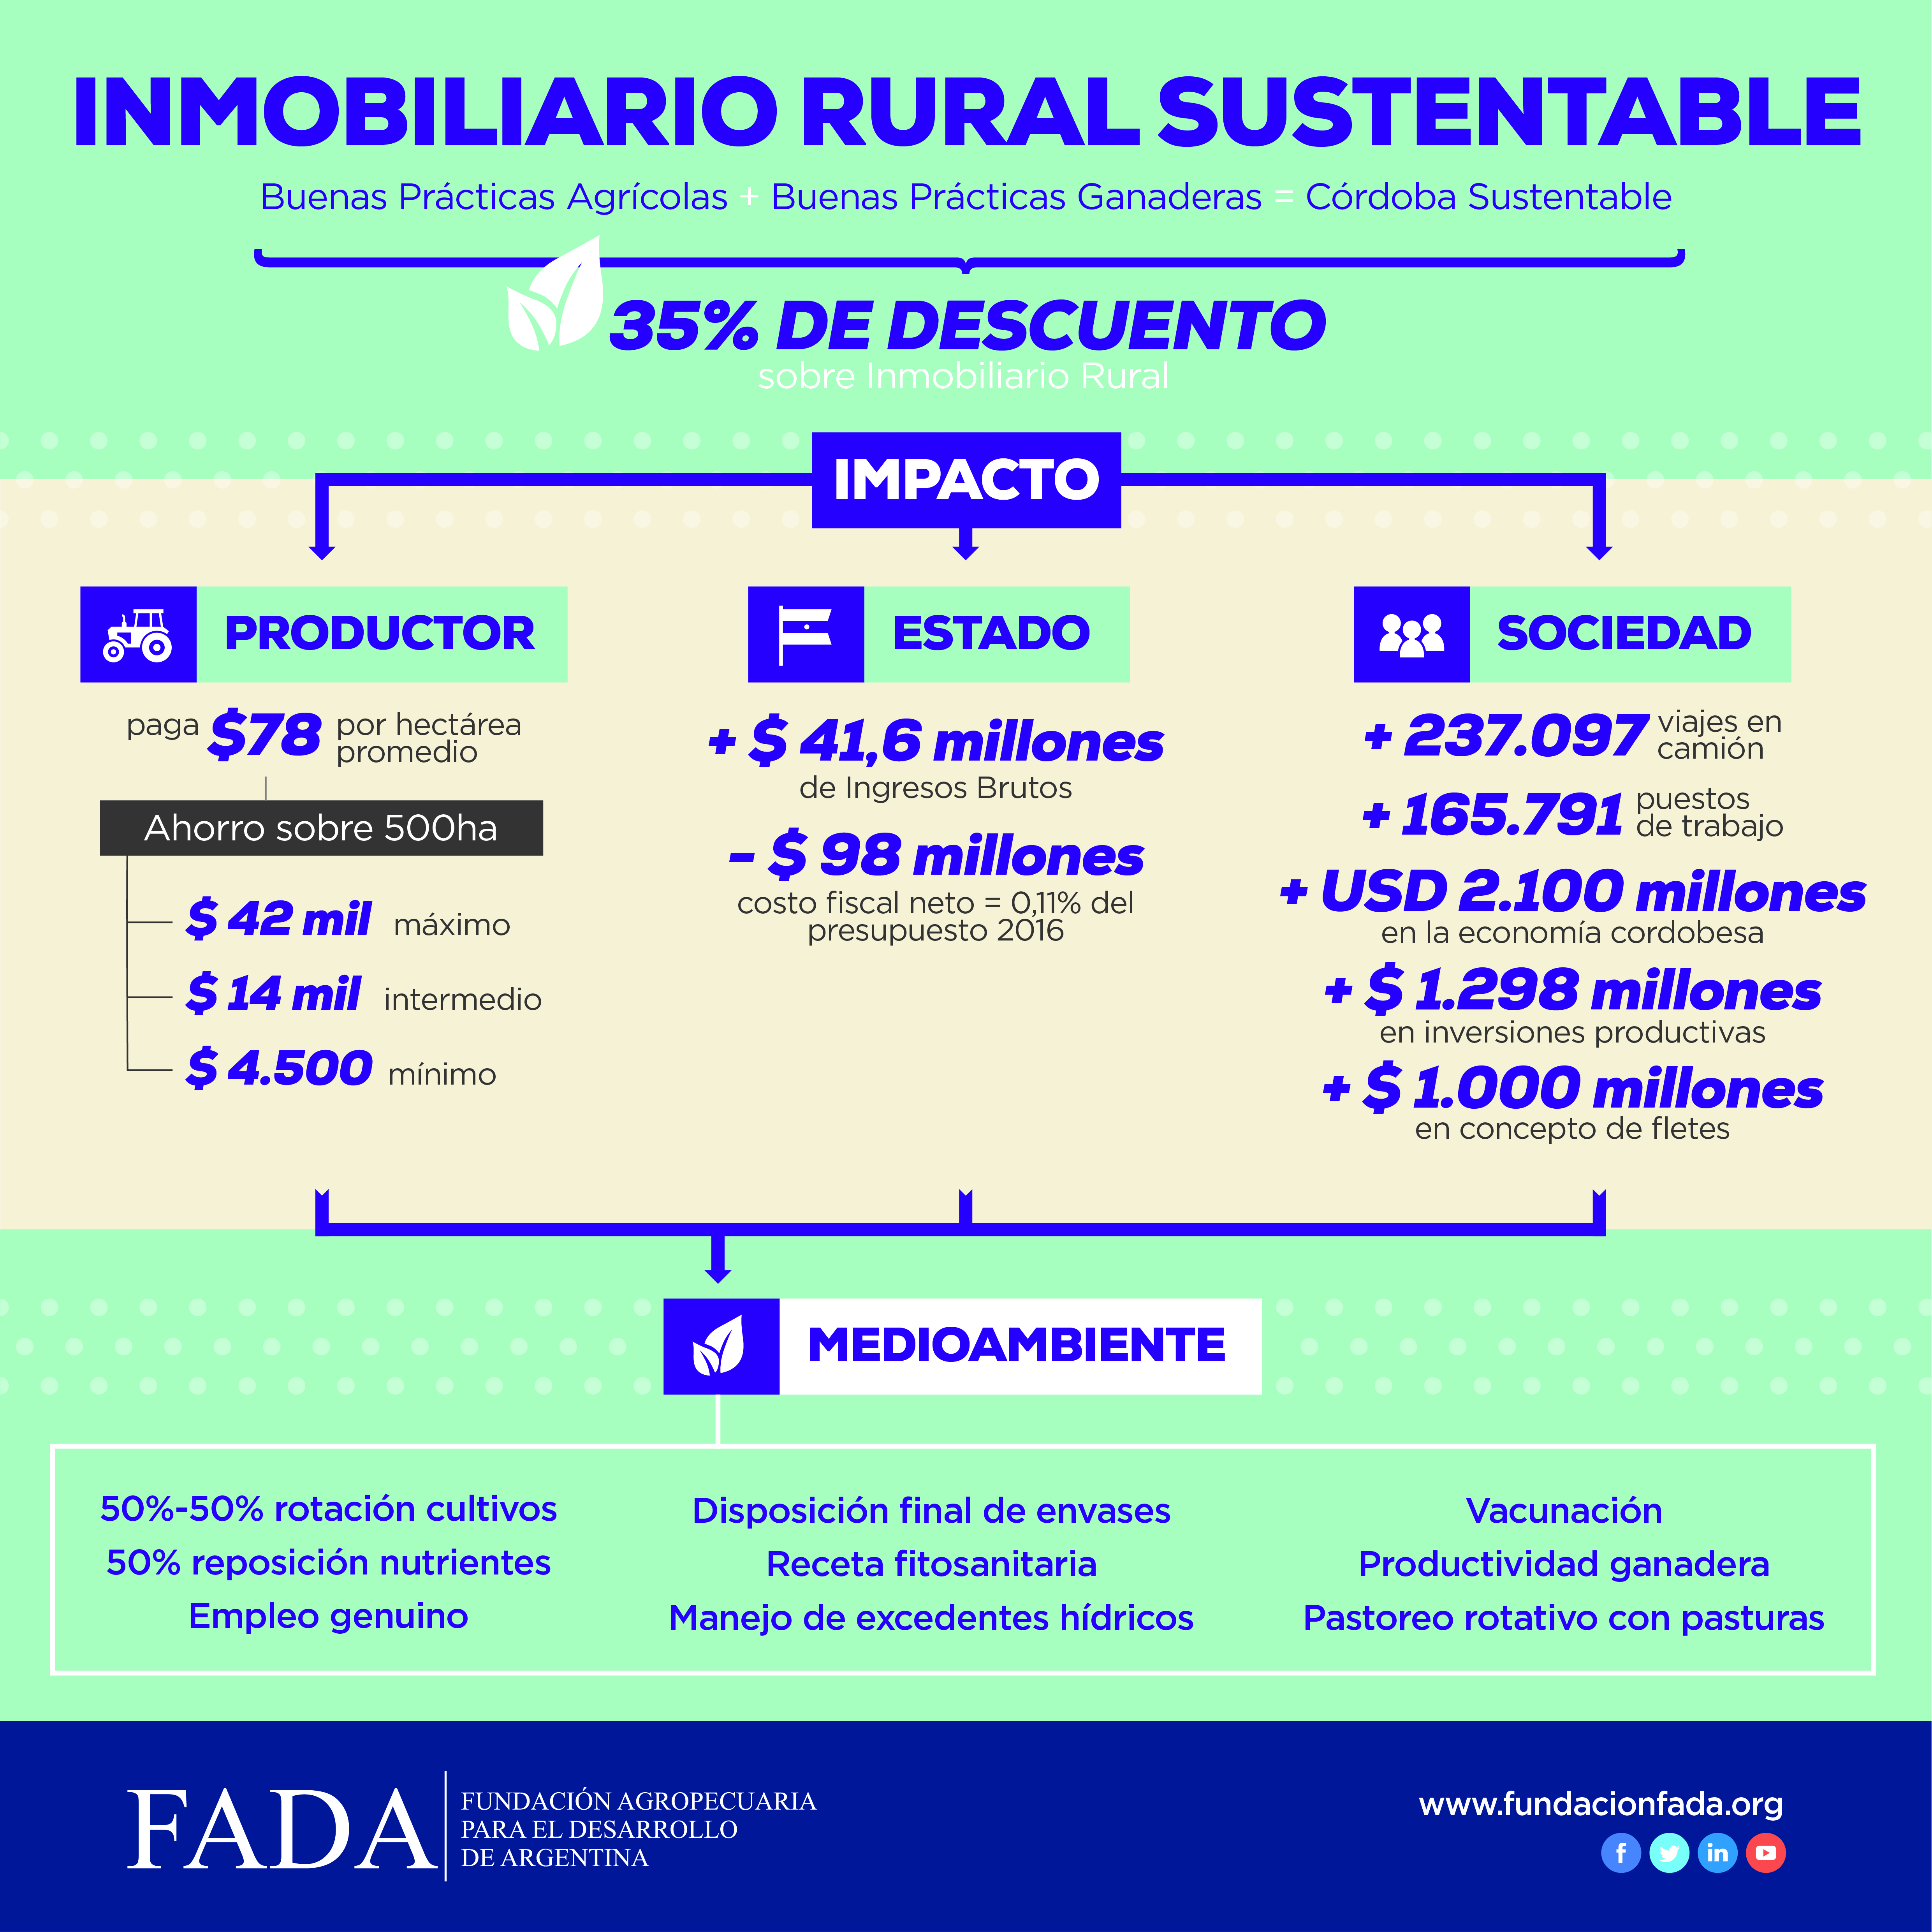 Inmobiliario Rural Sustentable